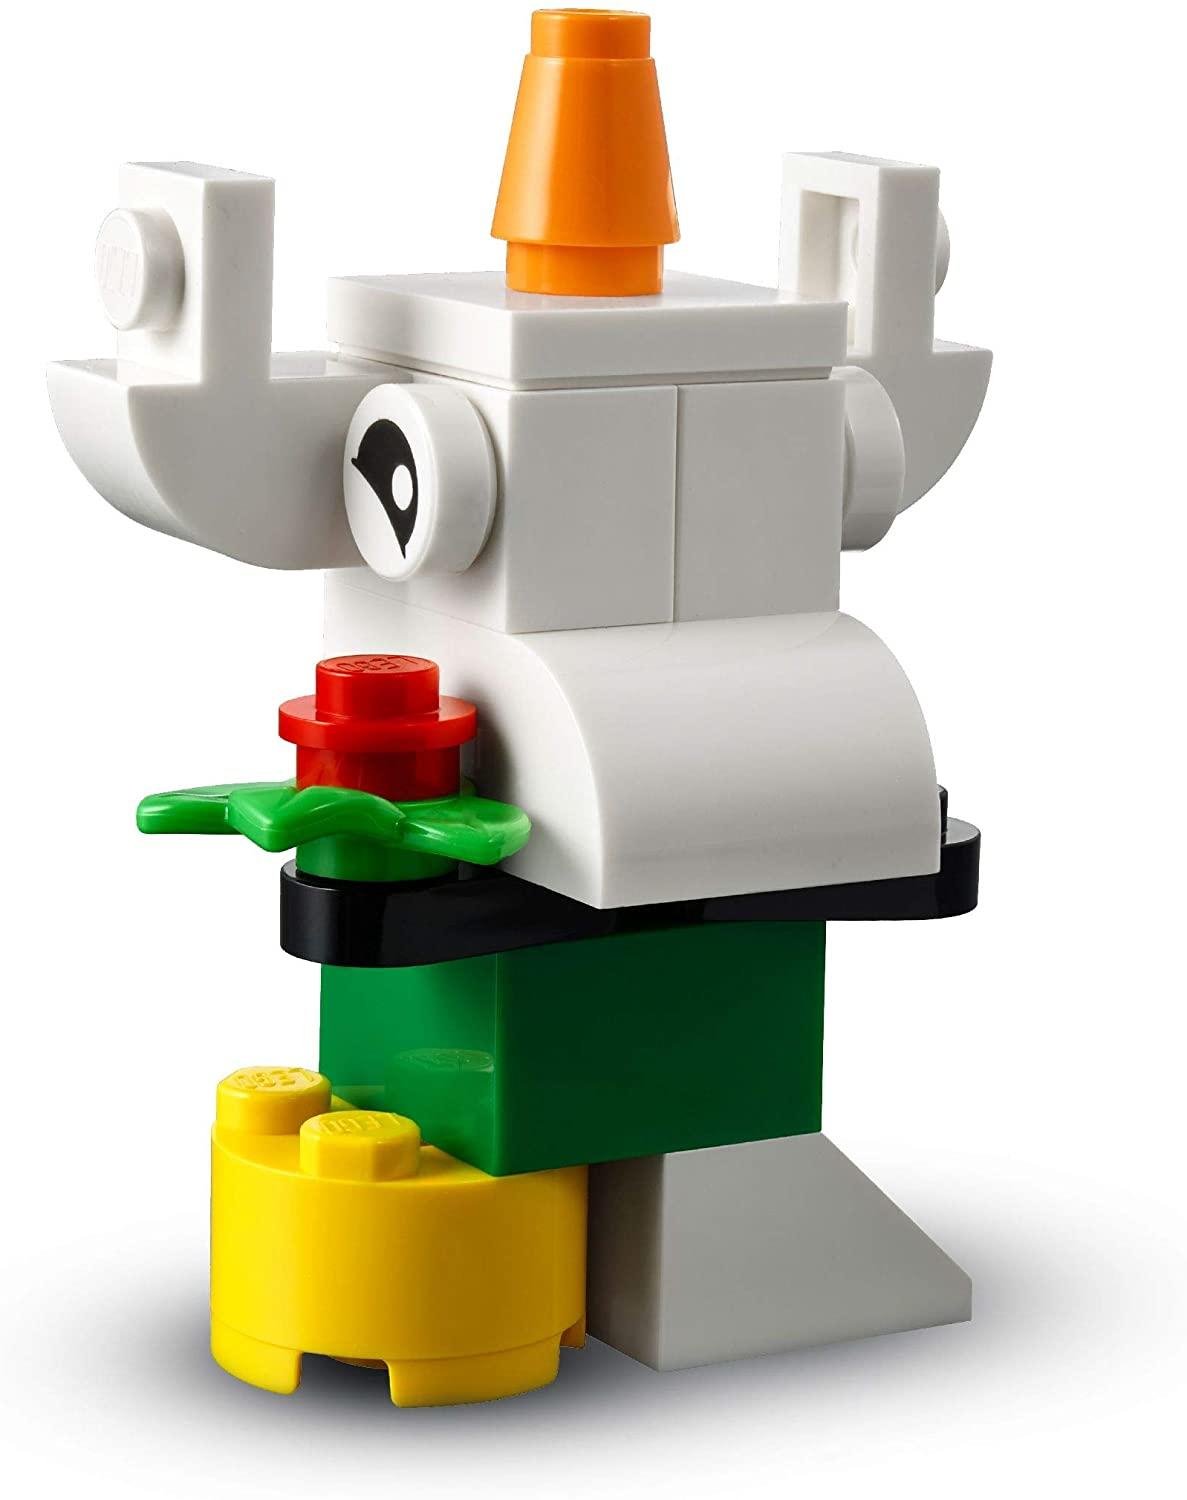 Lego 11012 Creative White Bricks Toymaster Ballina